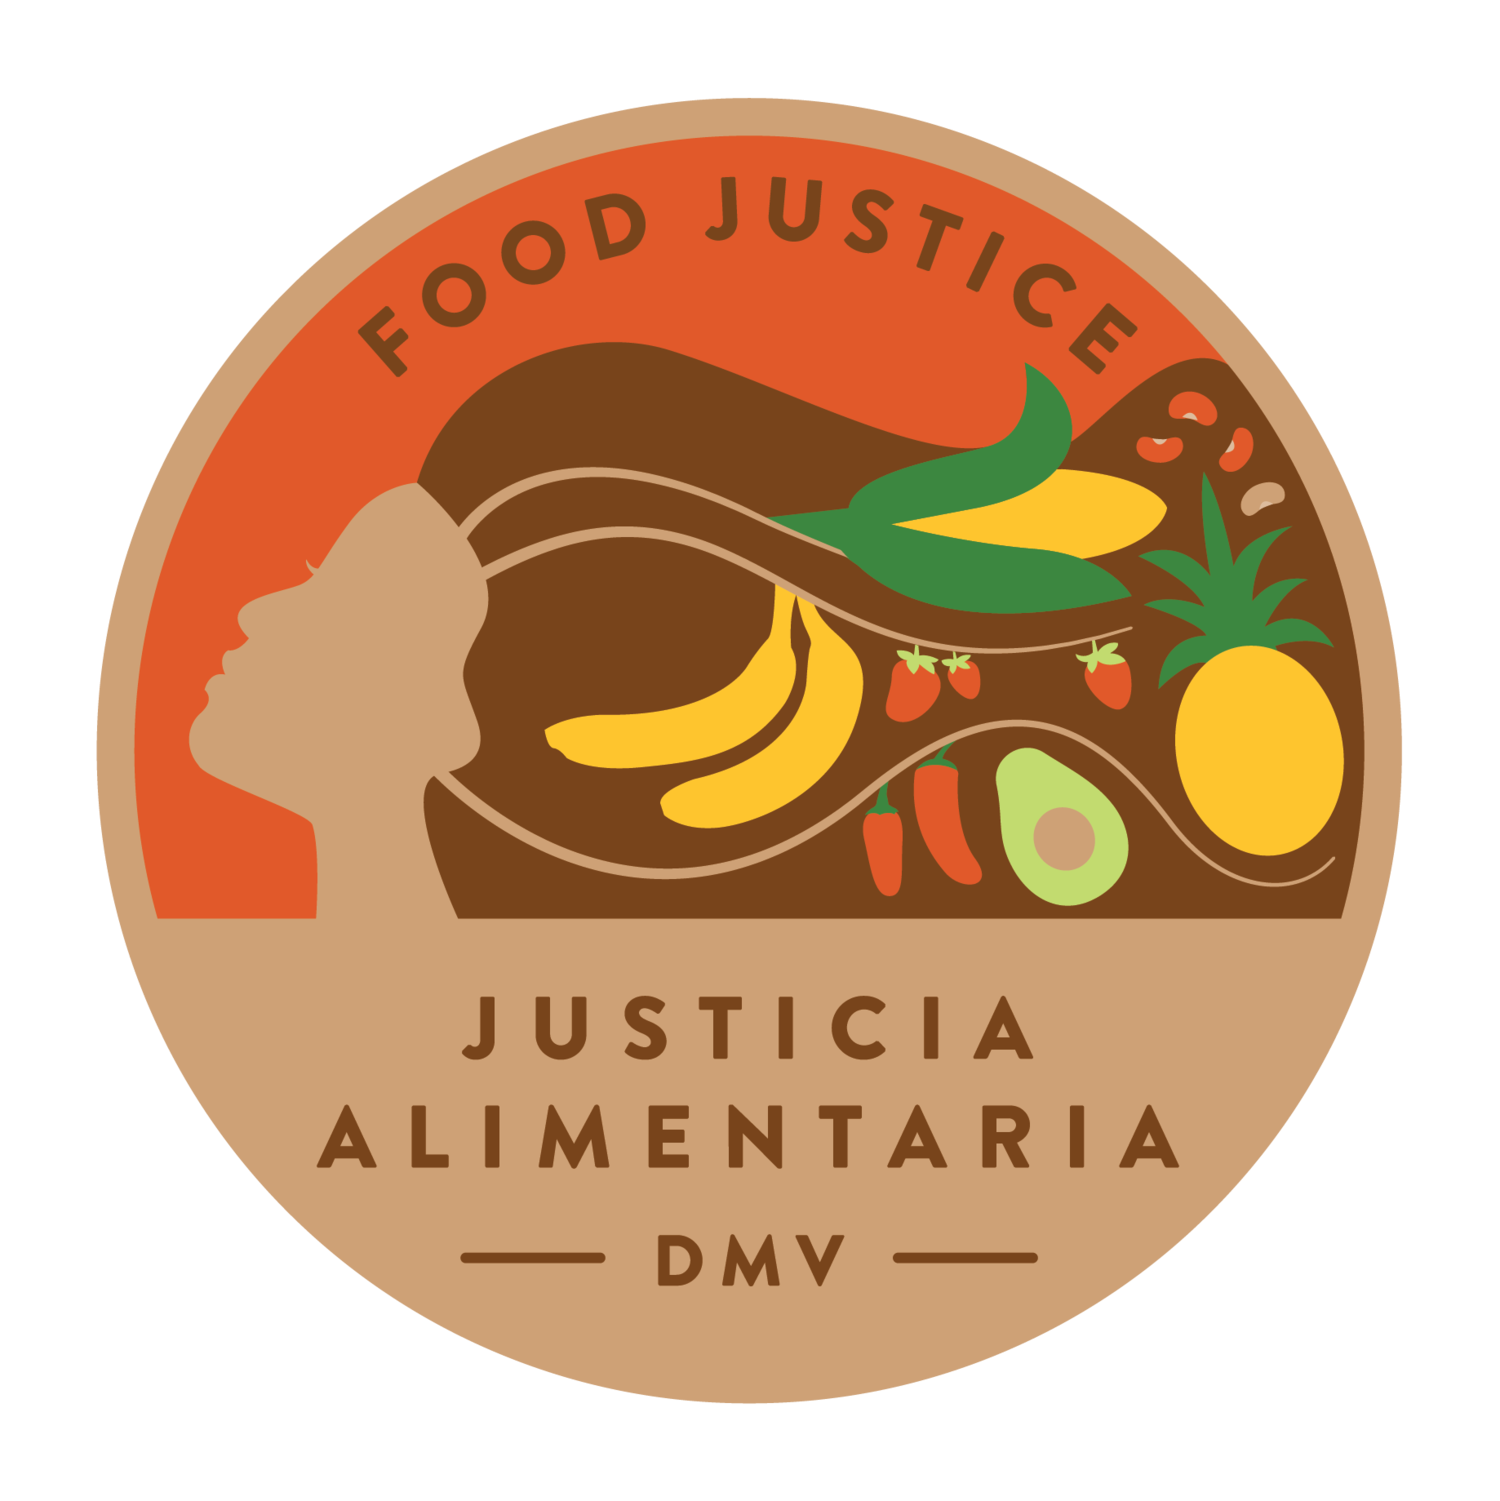 Food Justice DMV